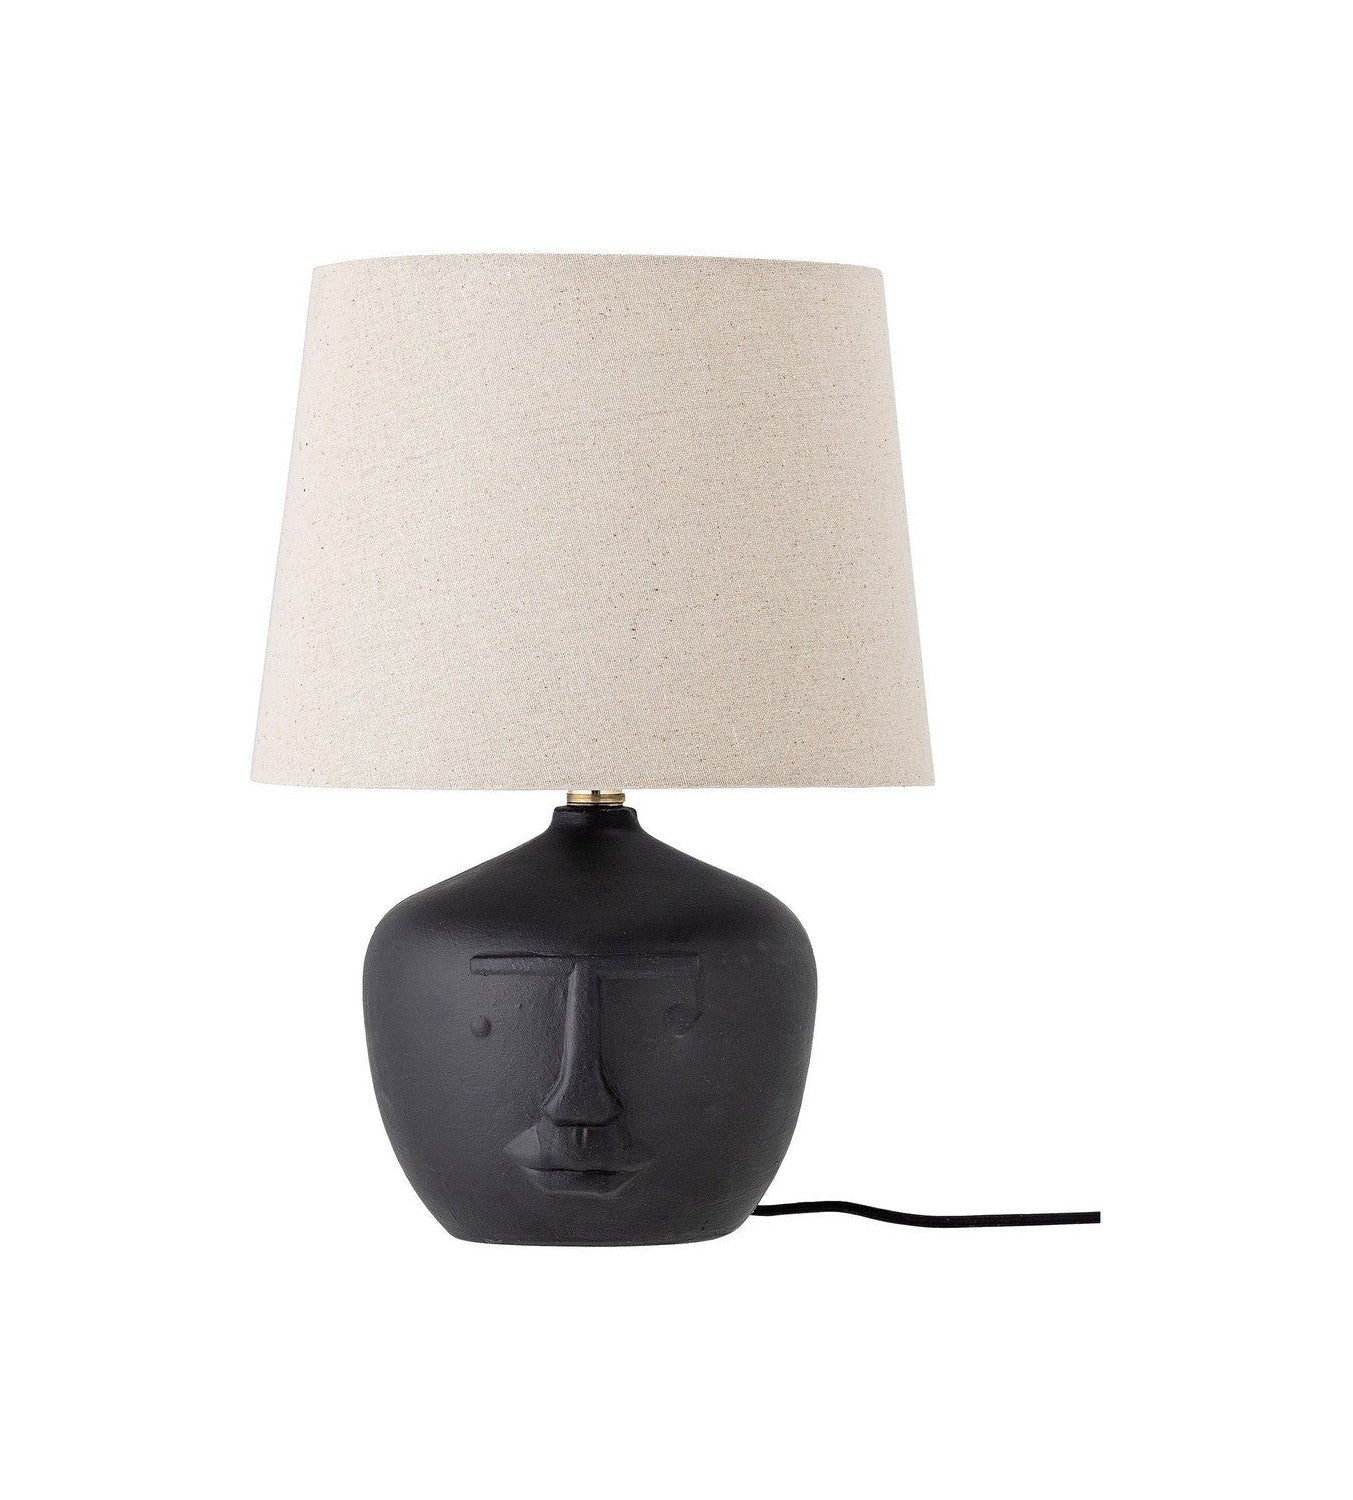 Bloomingville Matheo Table lamp, Black, Terracotta